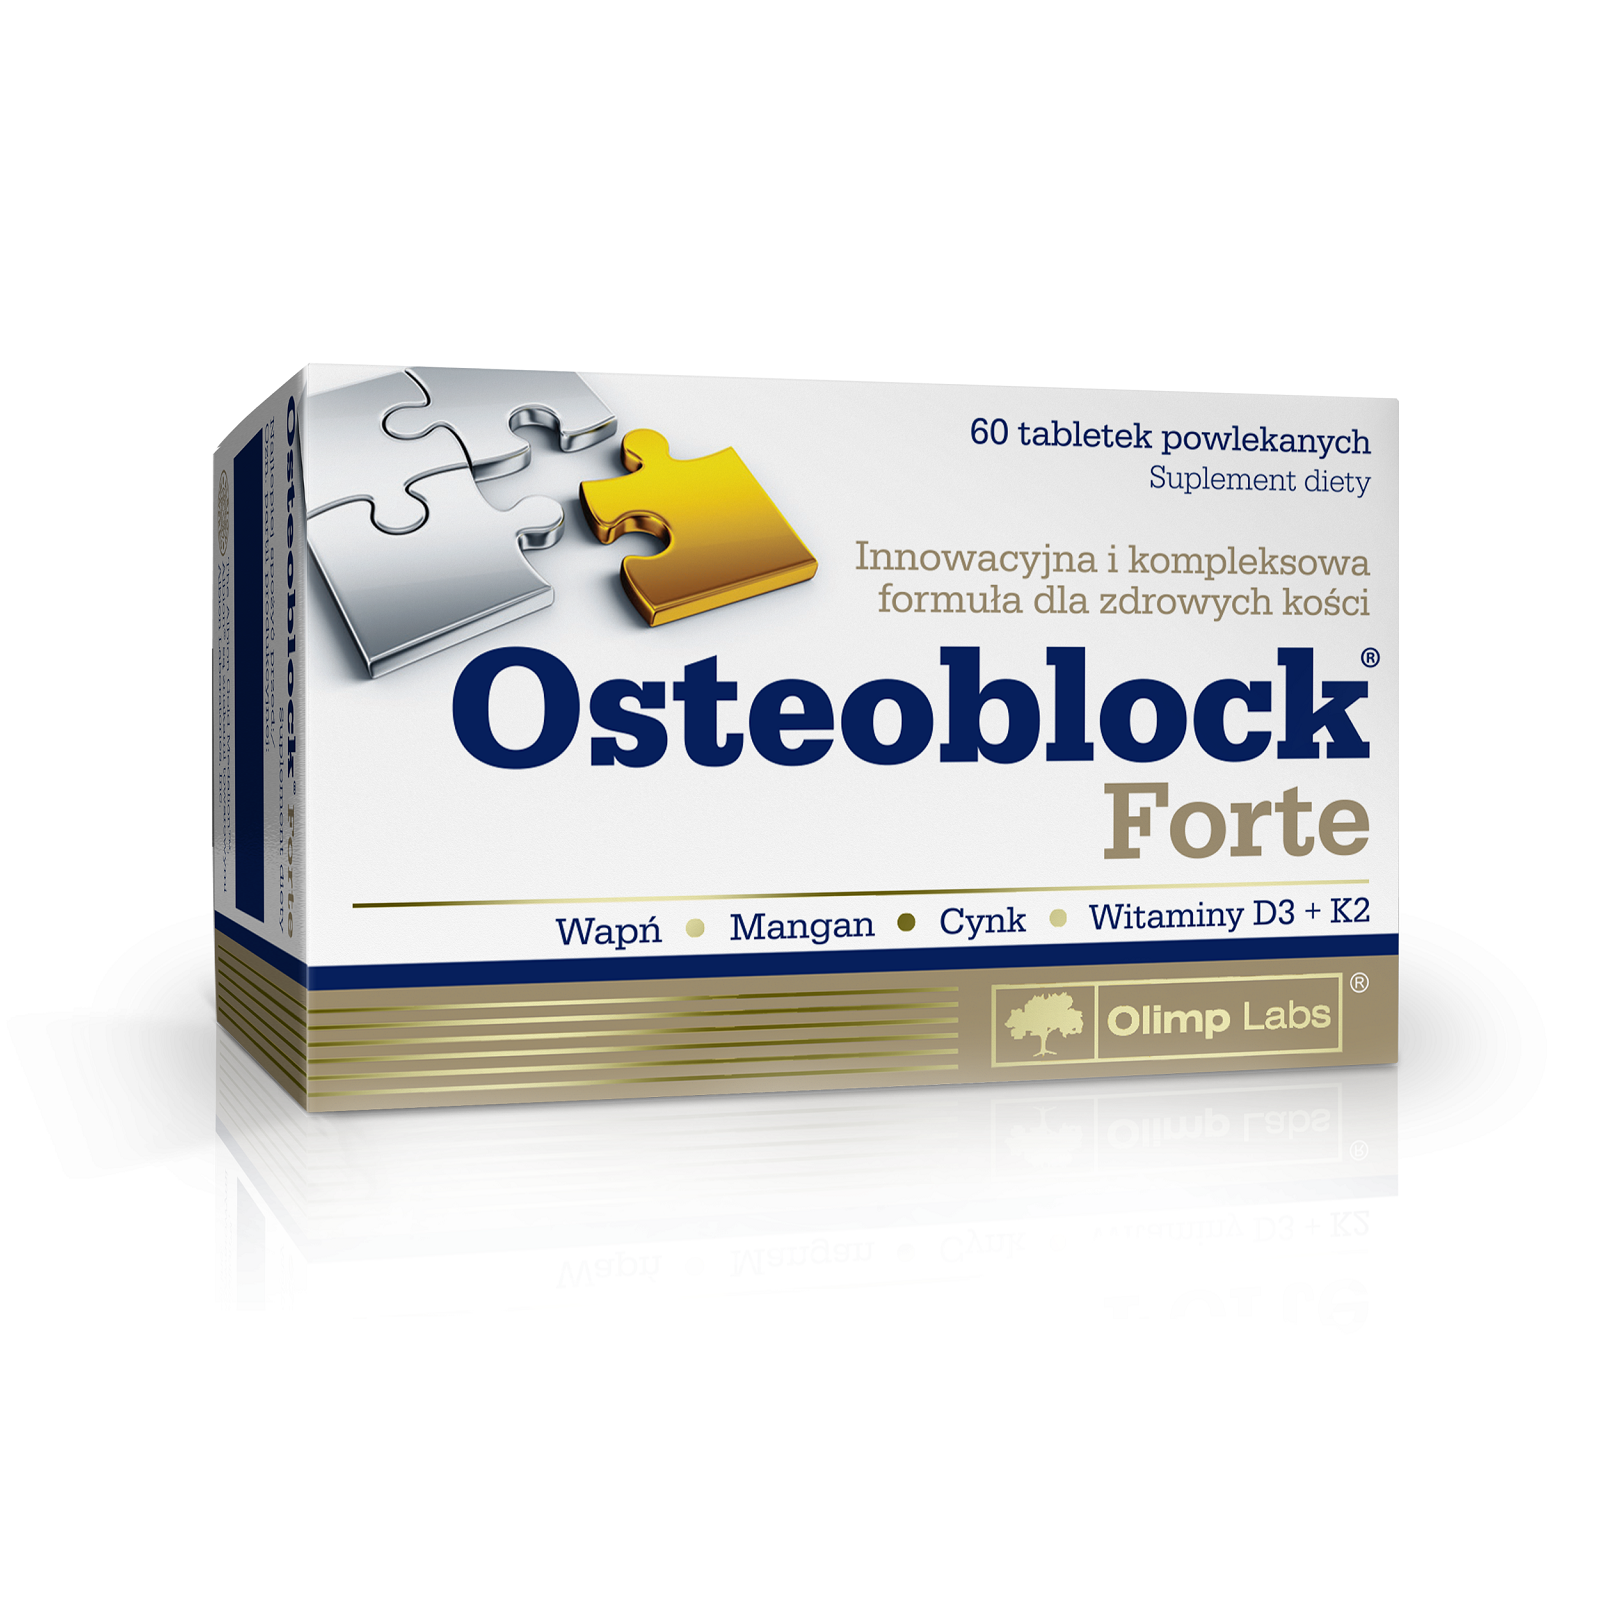 фото Витамины olimp labs osteoblock forte 60 таблетки 60 шт.